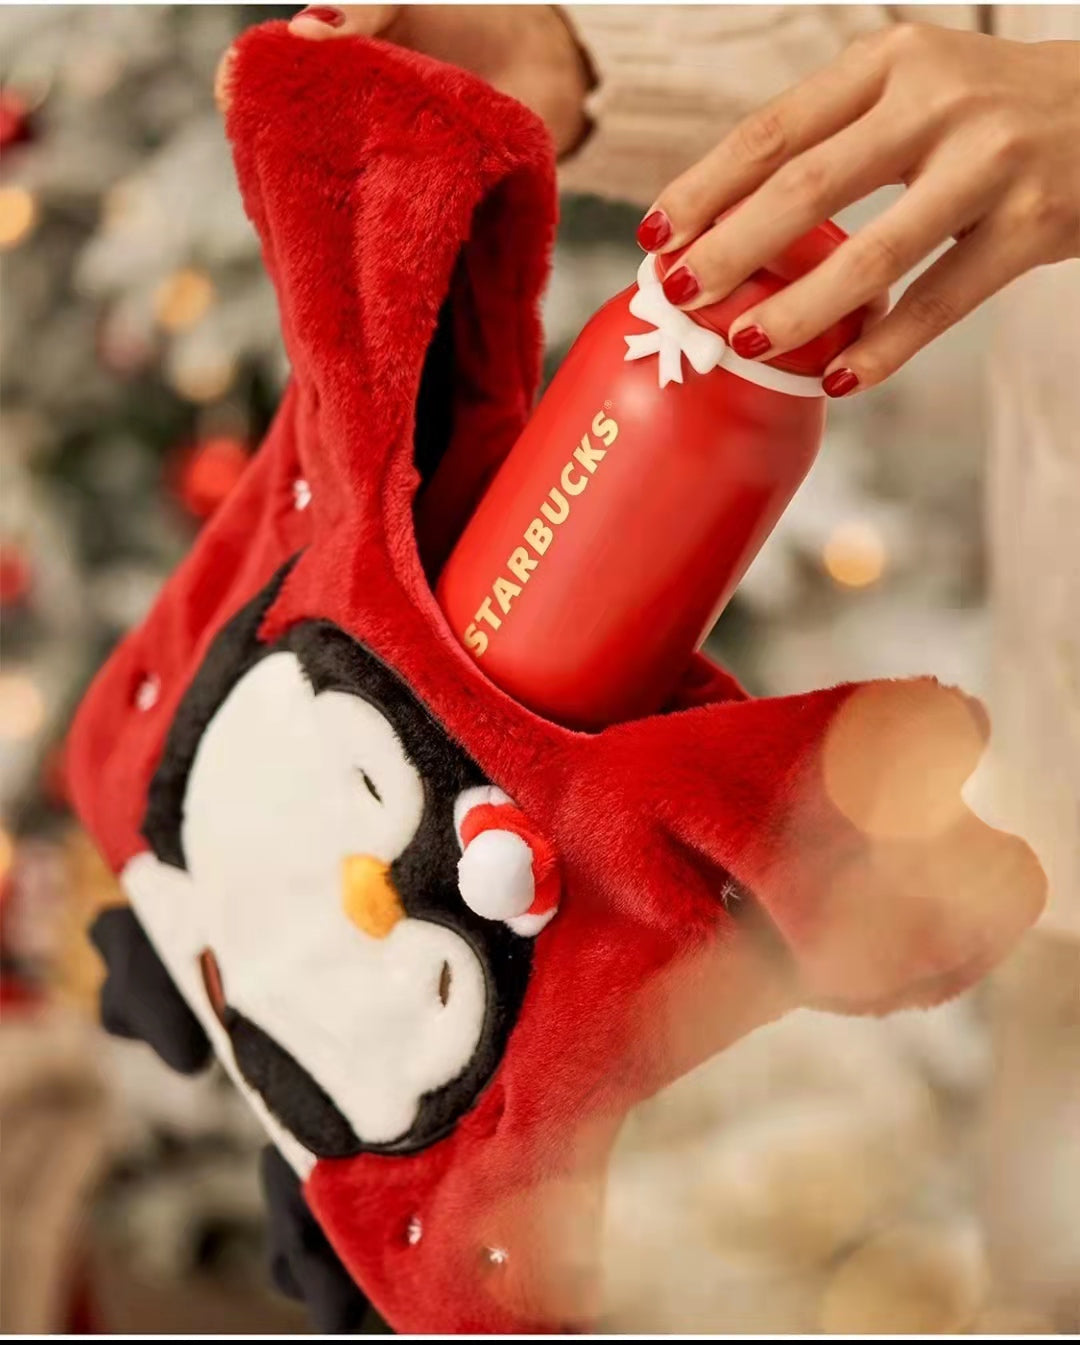 2021 China Red Christmas Penguin Plush Bag & 13oz Stainless Steel Vacuum Mug